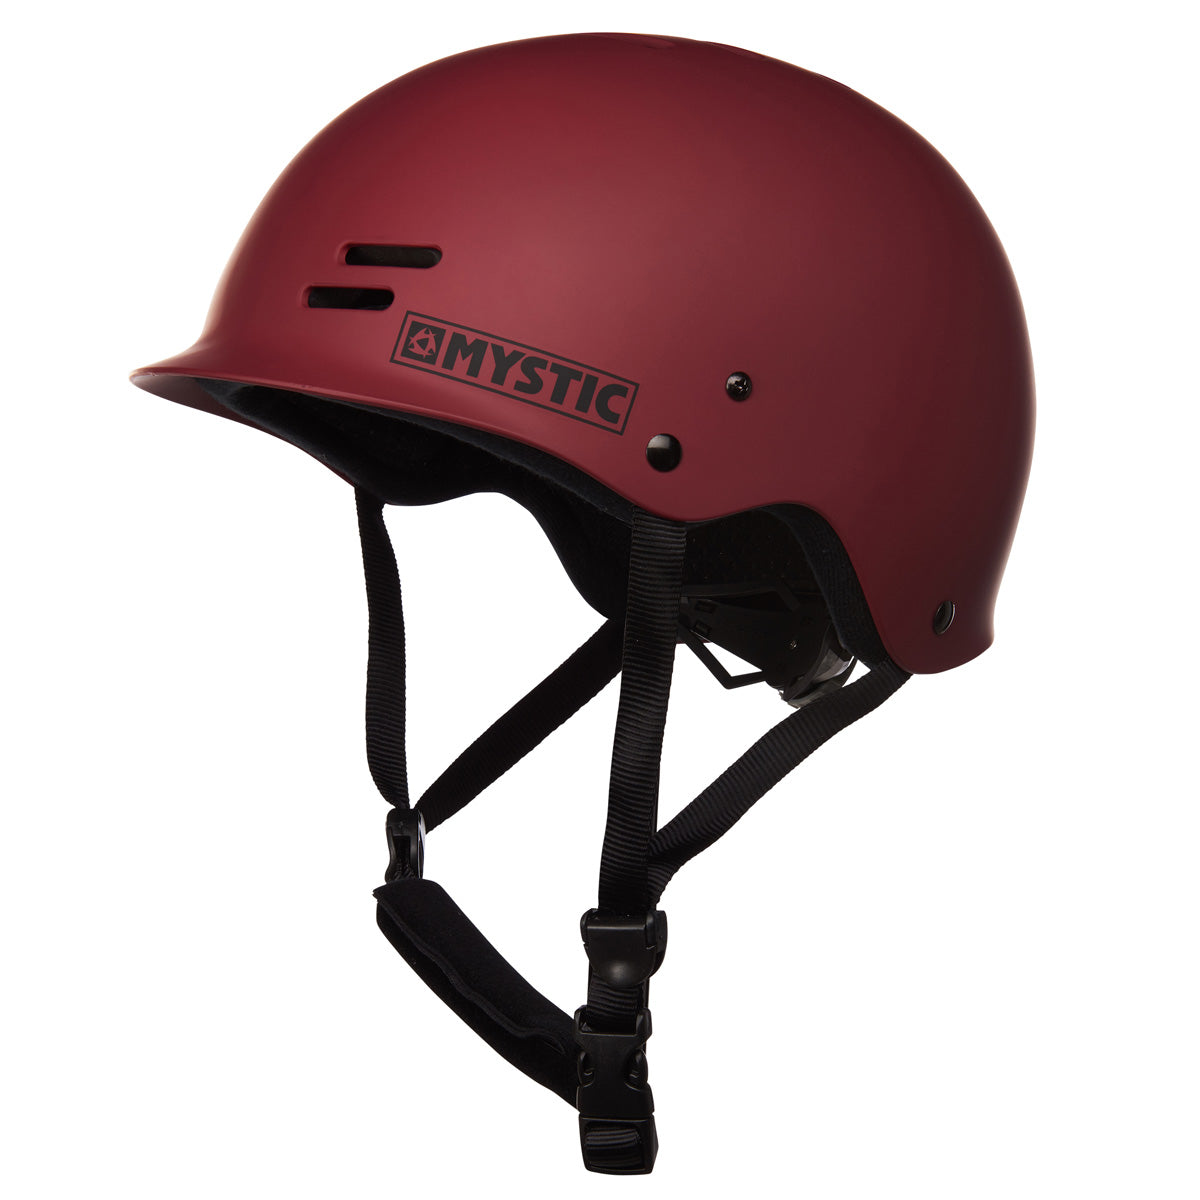 Mystic Predator Helmet - SUP